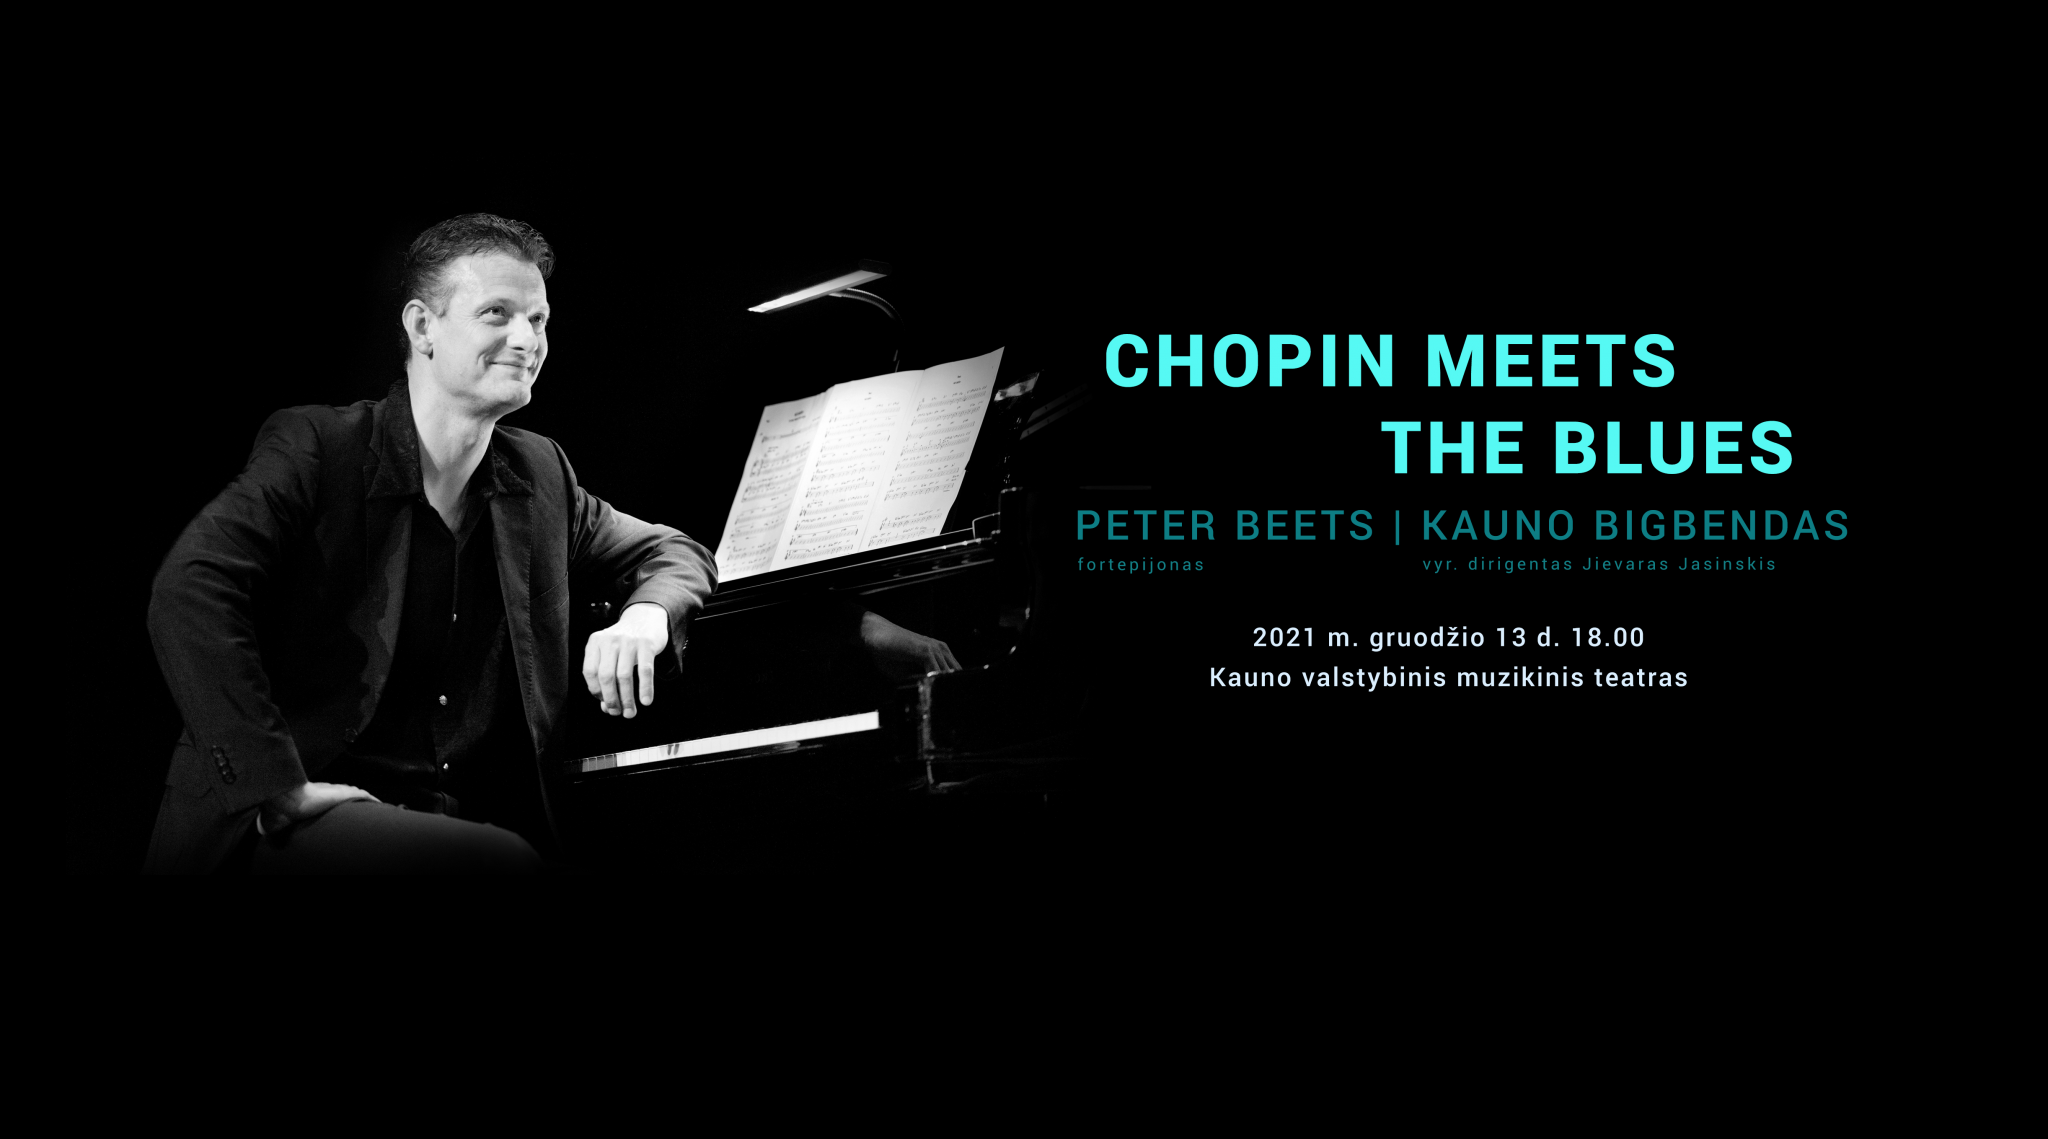 Chopin Meets the Blues | Peter Beets ir Kauno bigbendas